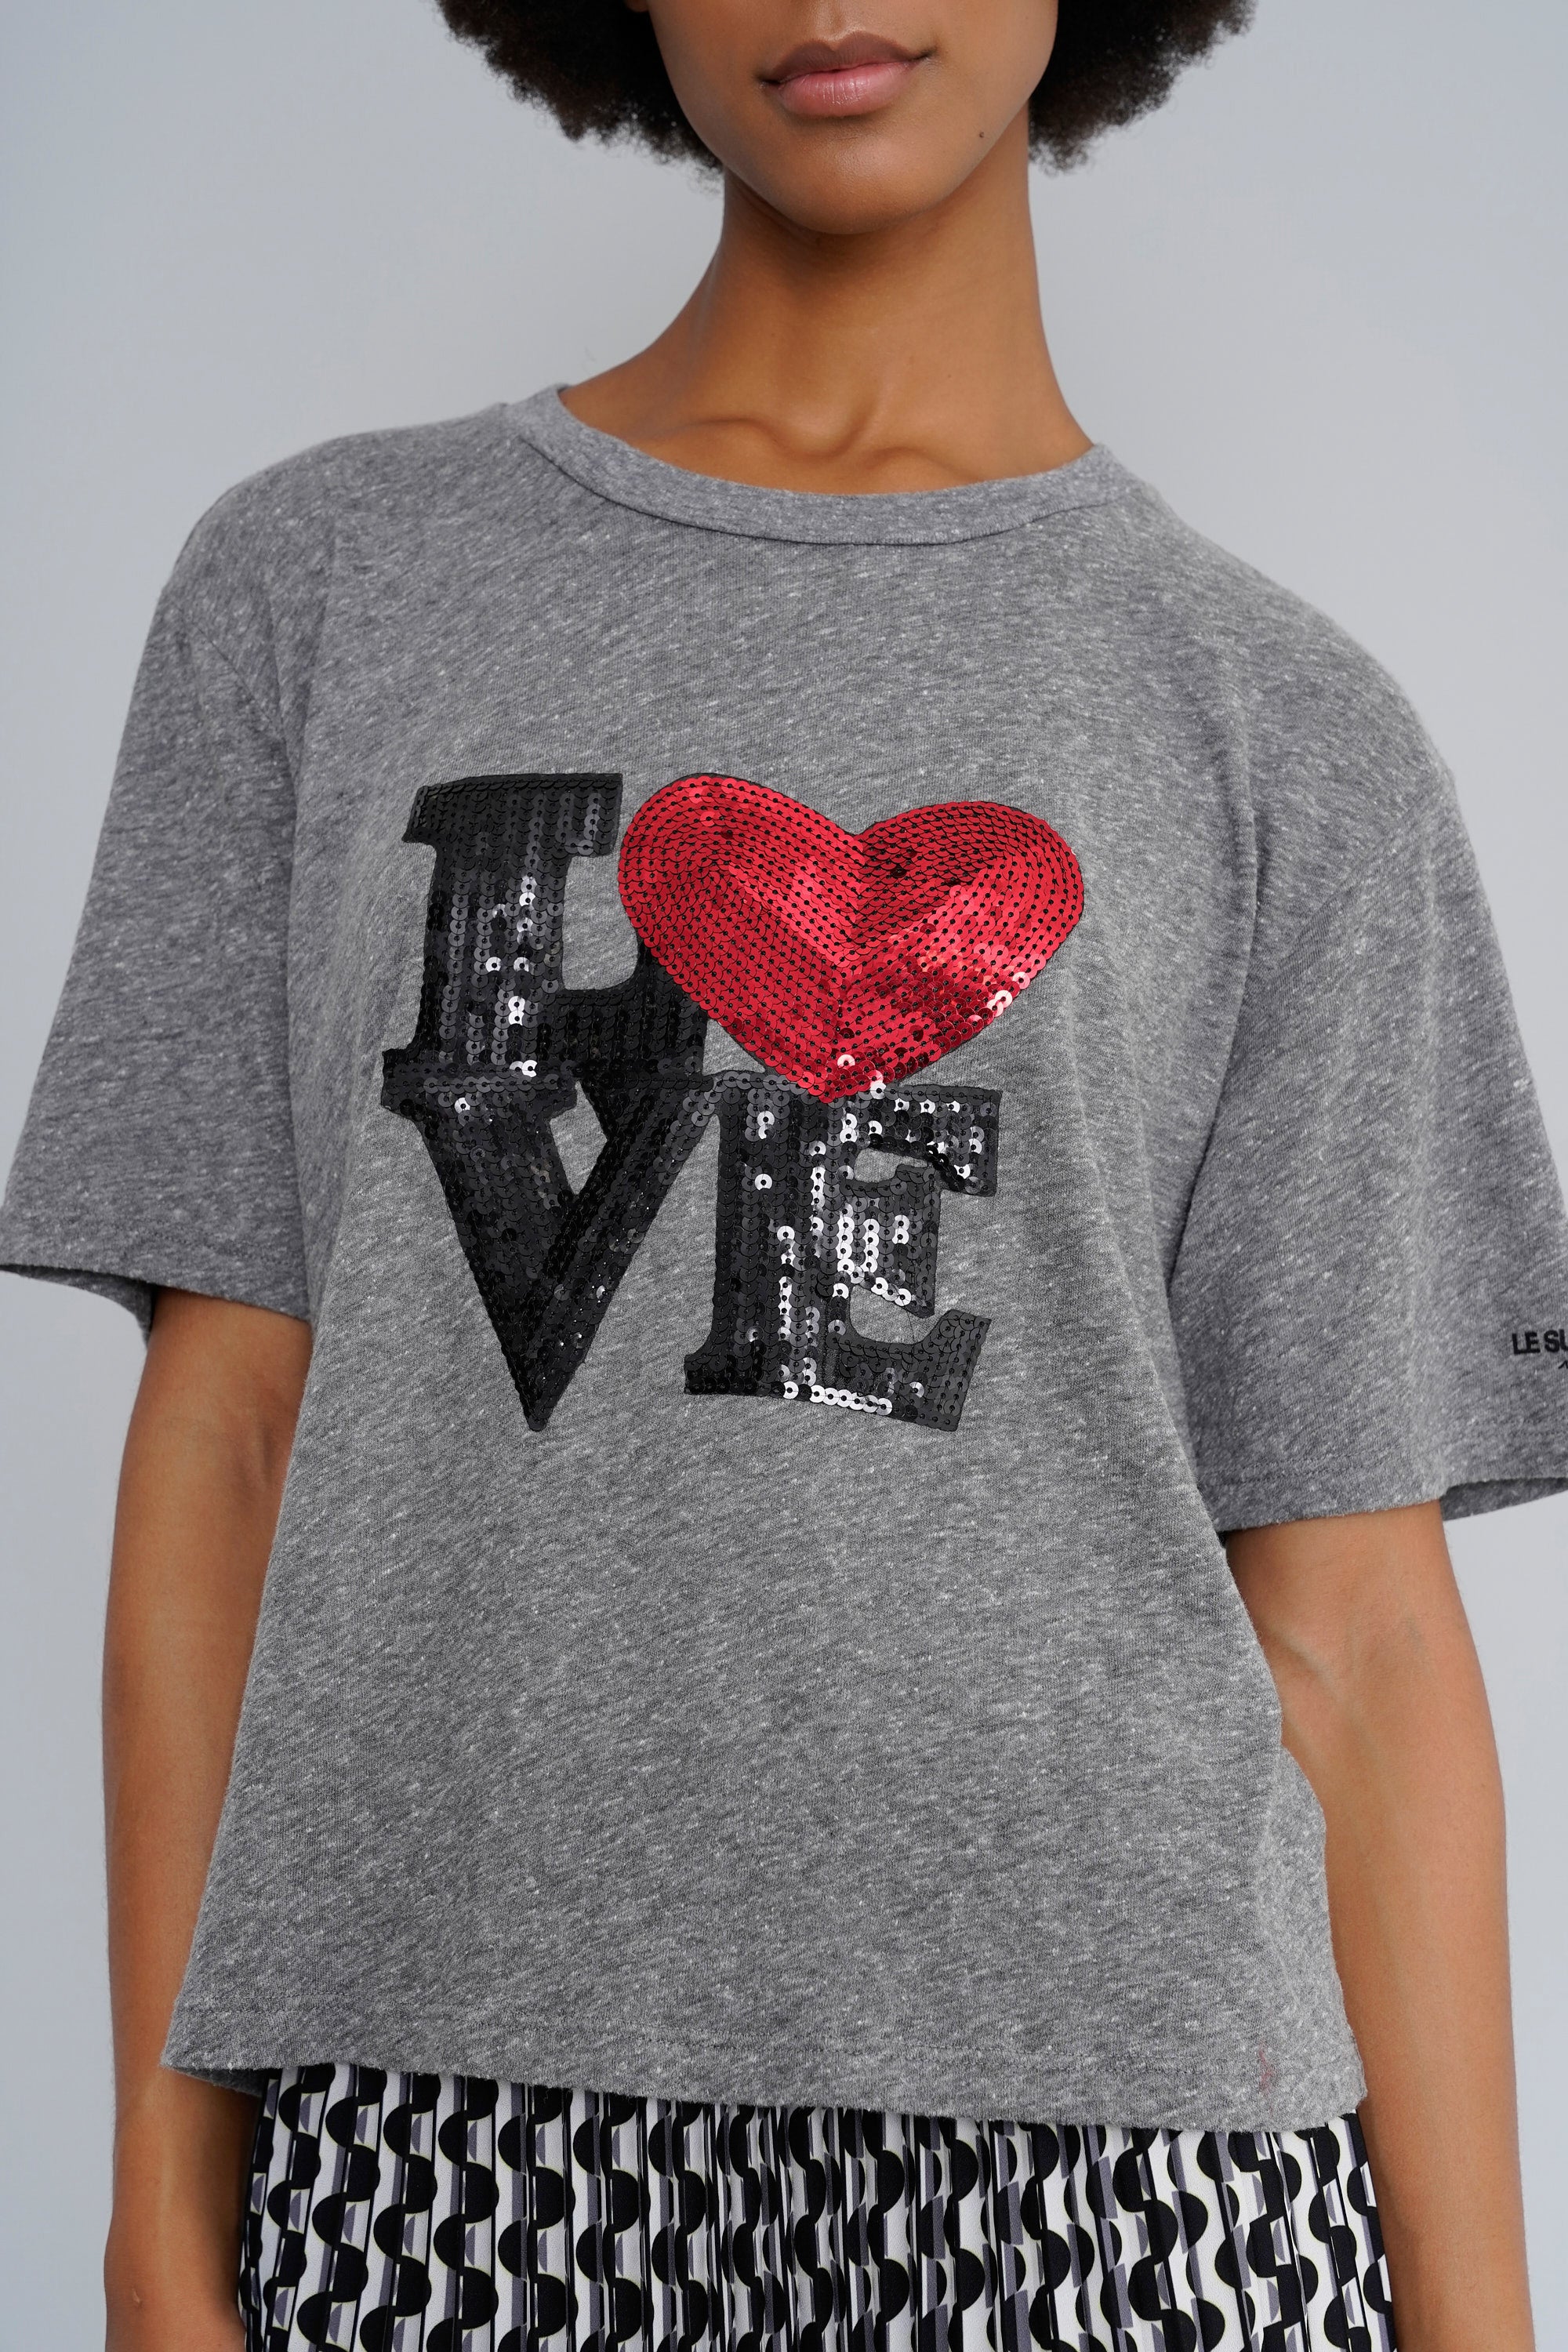 Camiseta de amor